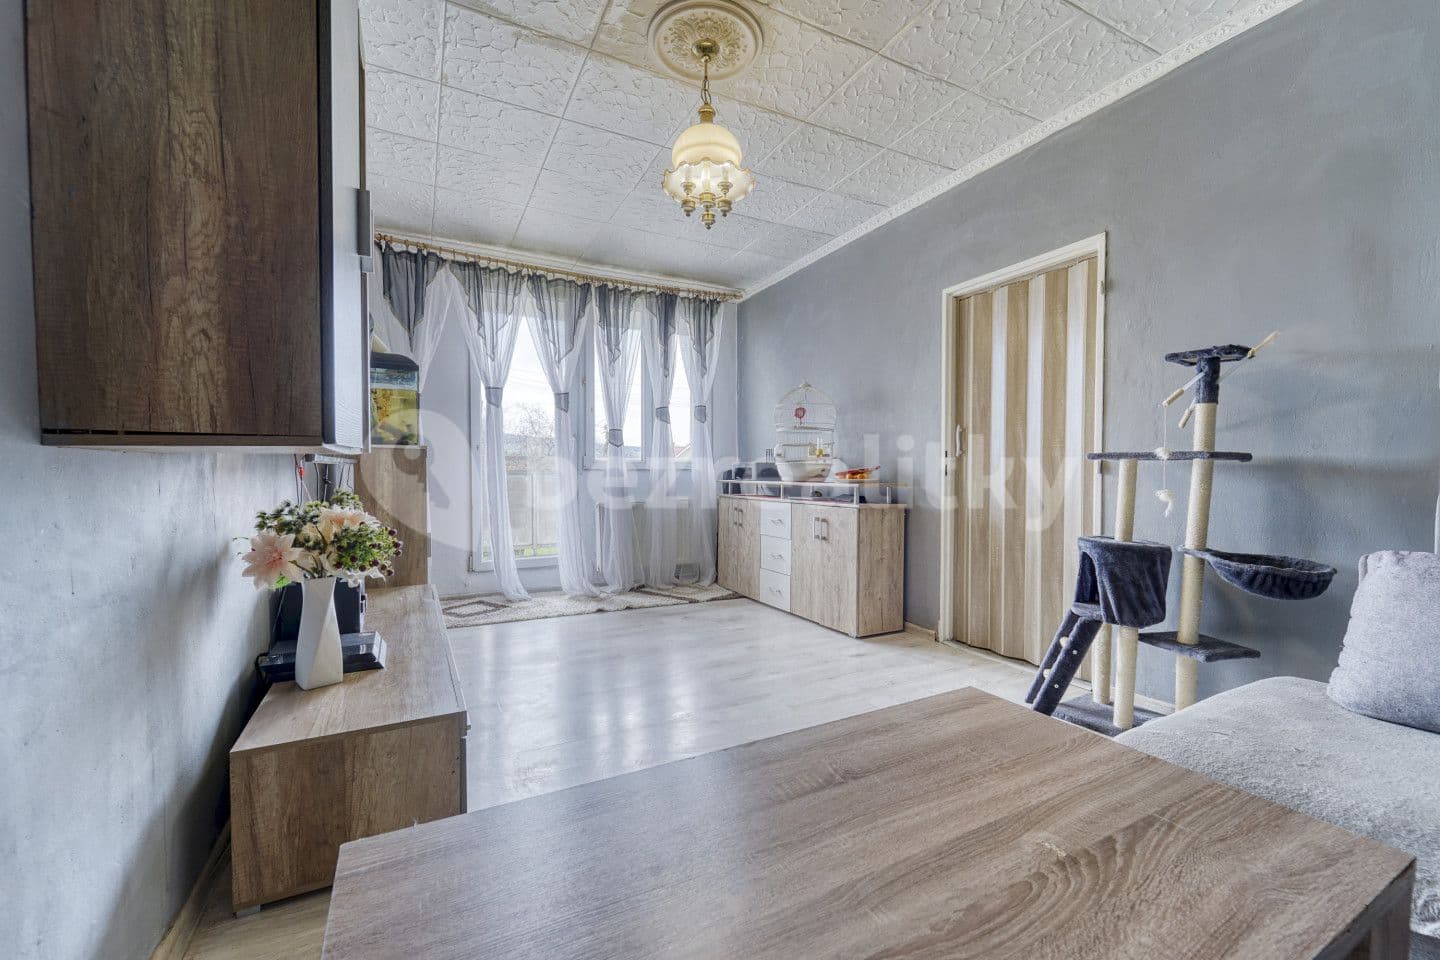 3 bedroom flat for sale, 63 m², Pražská, Lubenec, Ústecký Region